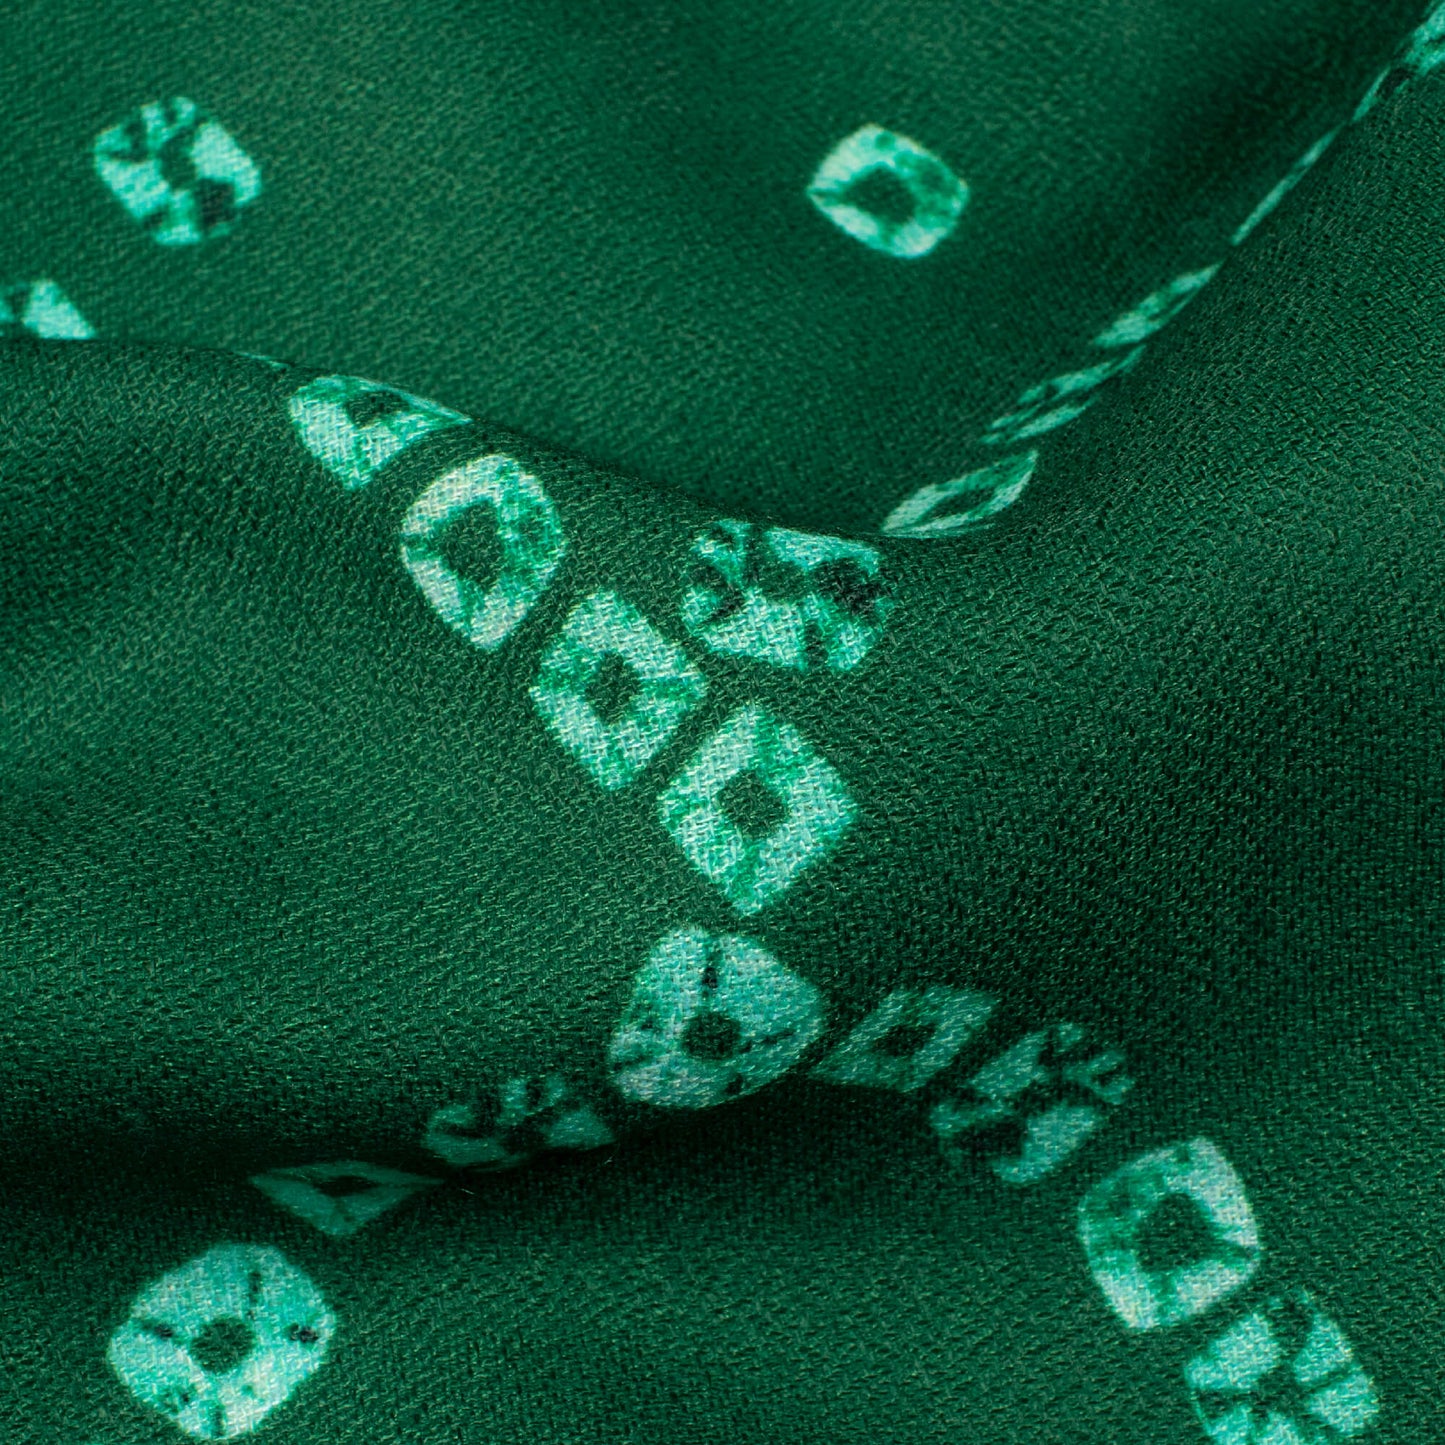 Bottle Green And White Bandhani Pattern Digital Print Moss Crepe Fabric